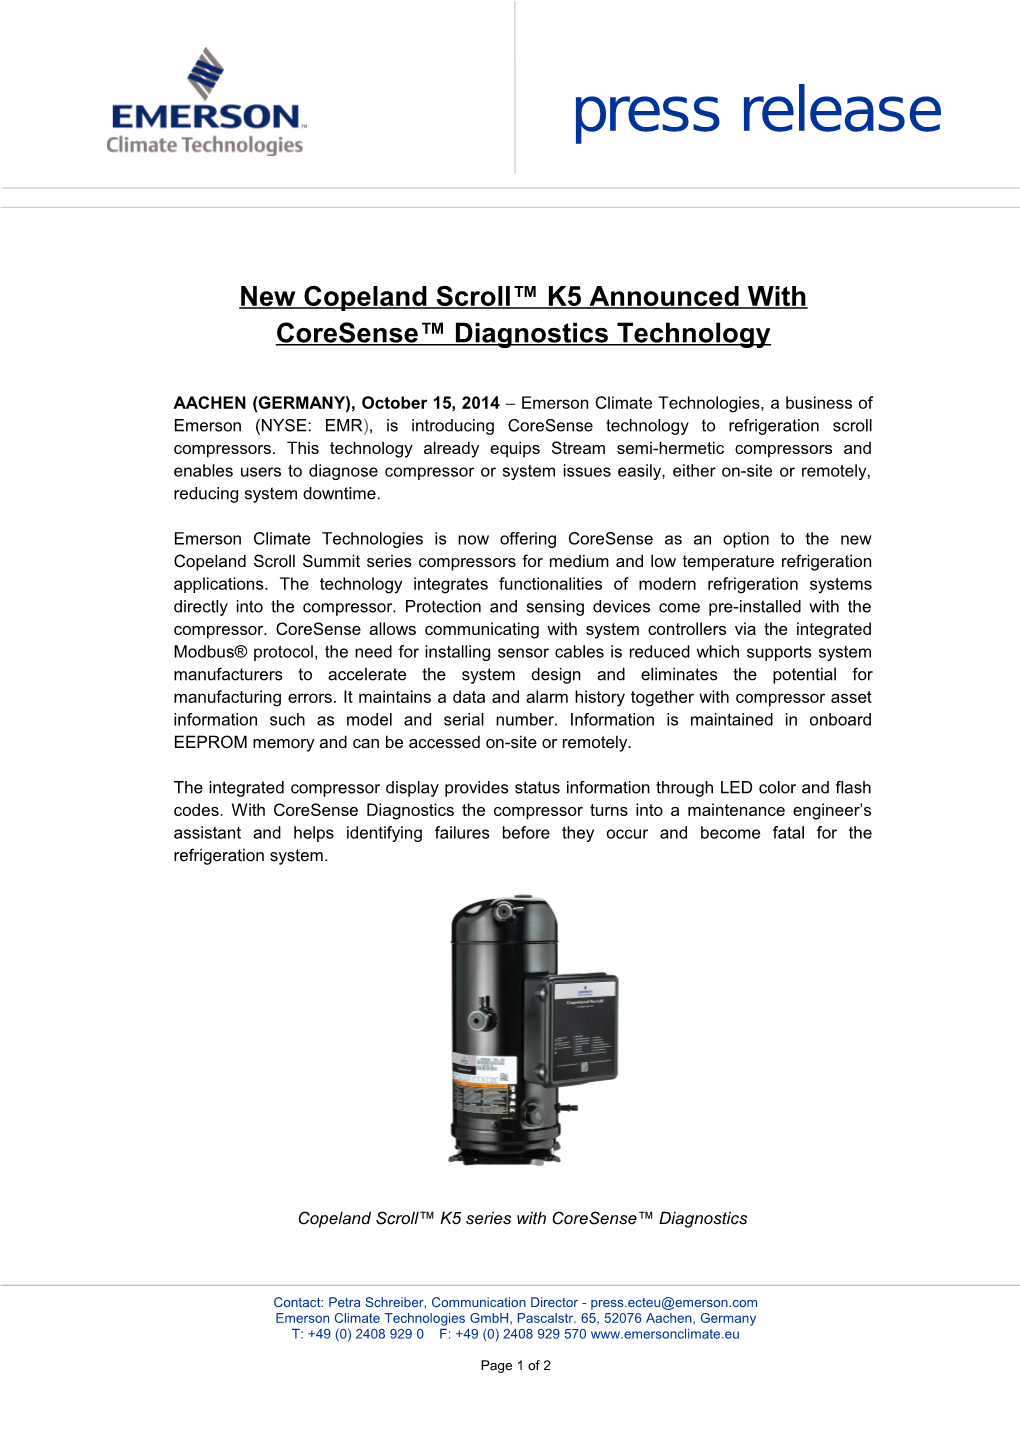 New Copeland Scroll K5 Announced with Coresense Diagnostics Technology